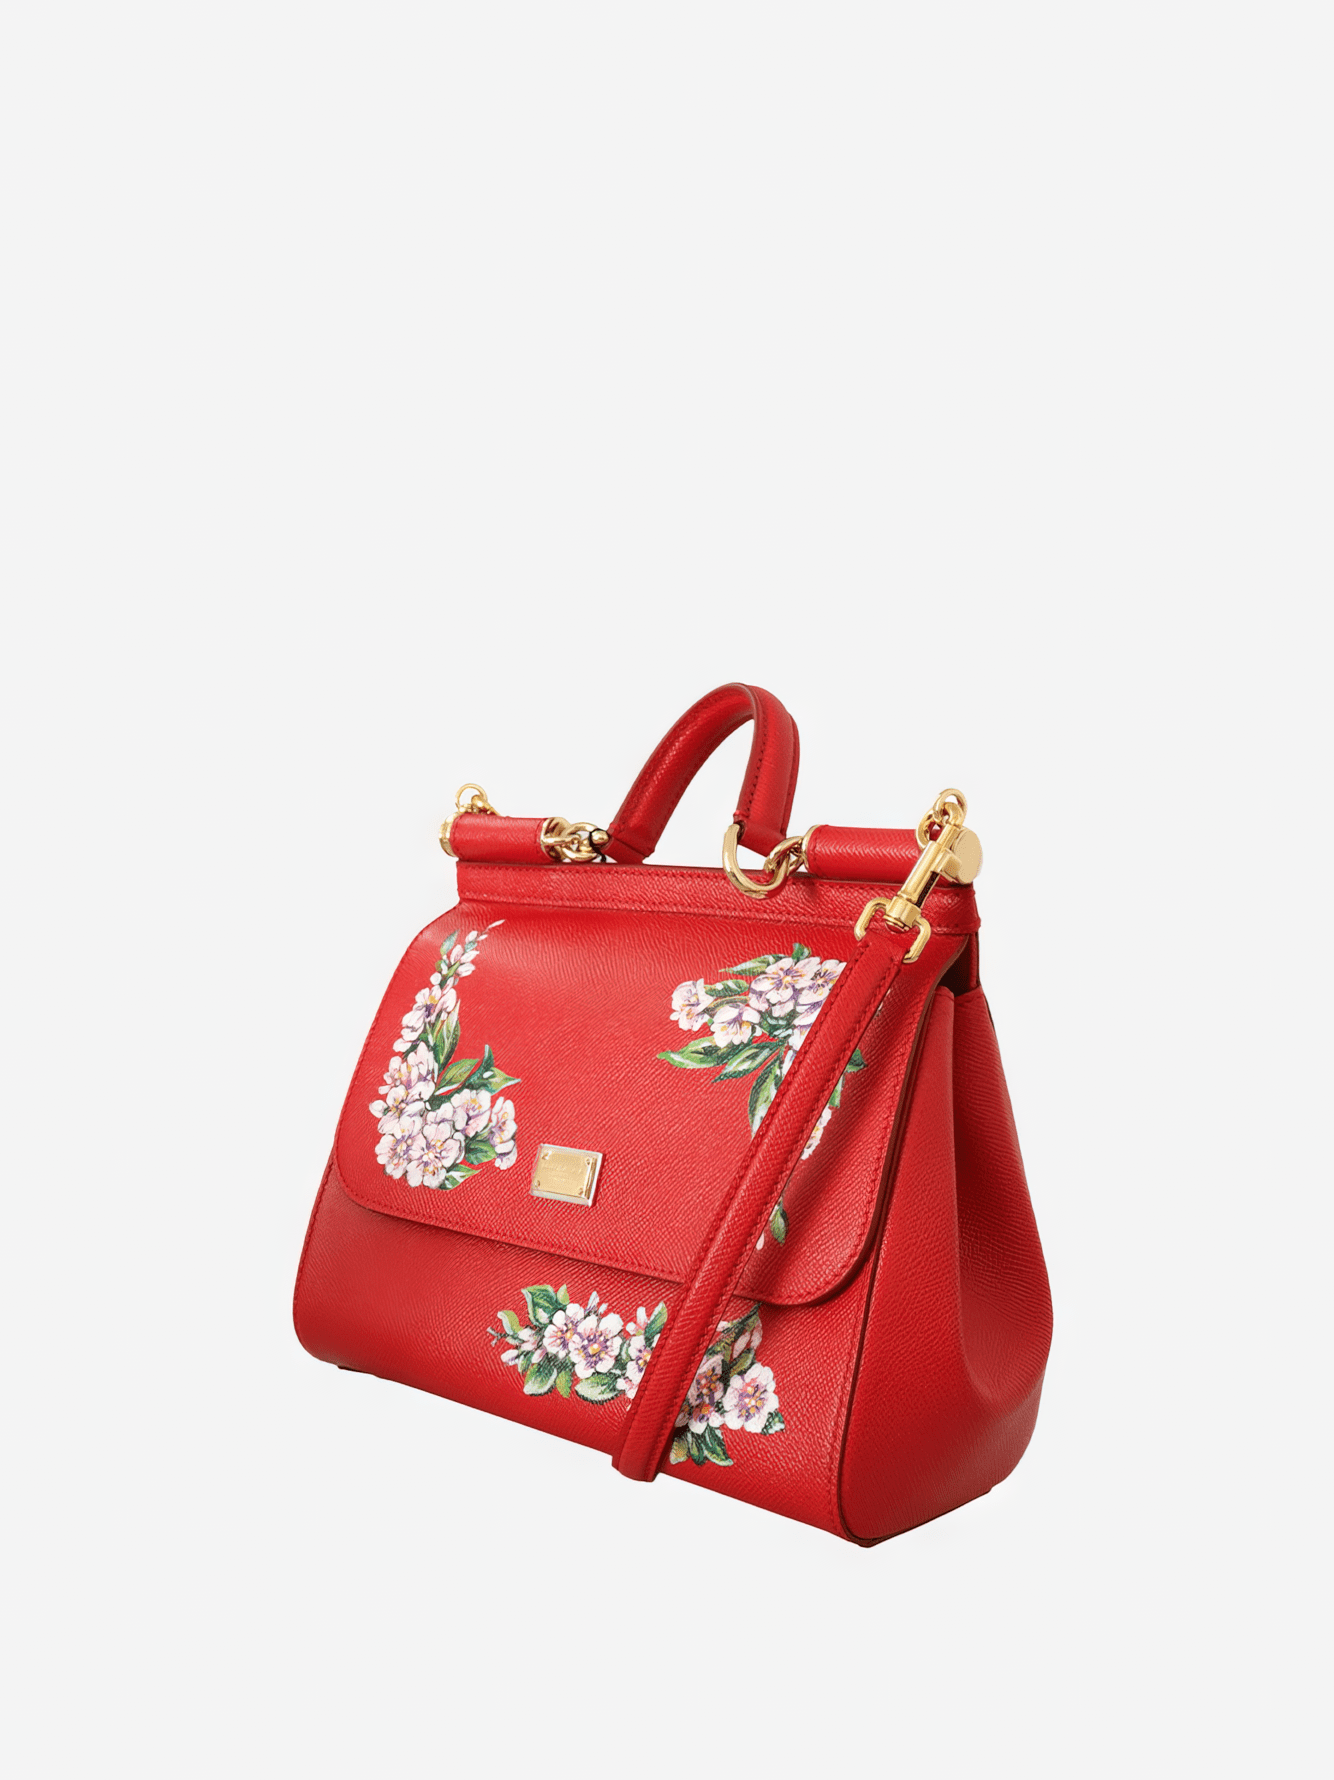 Dolce & Gabbana Sicily Floral Print Bag